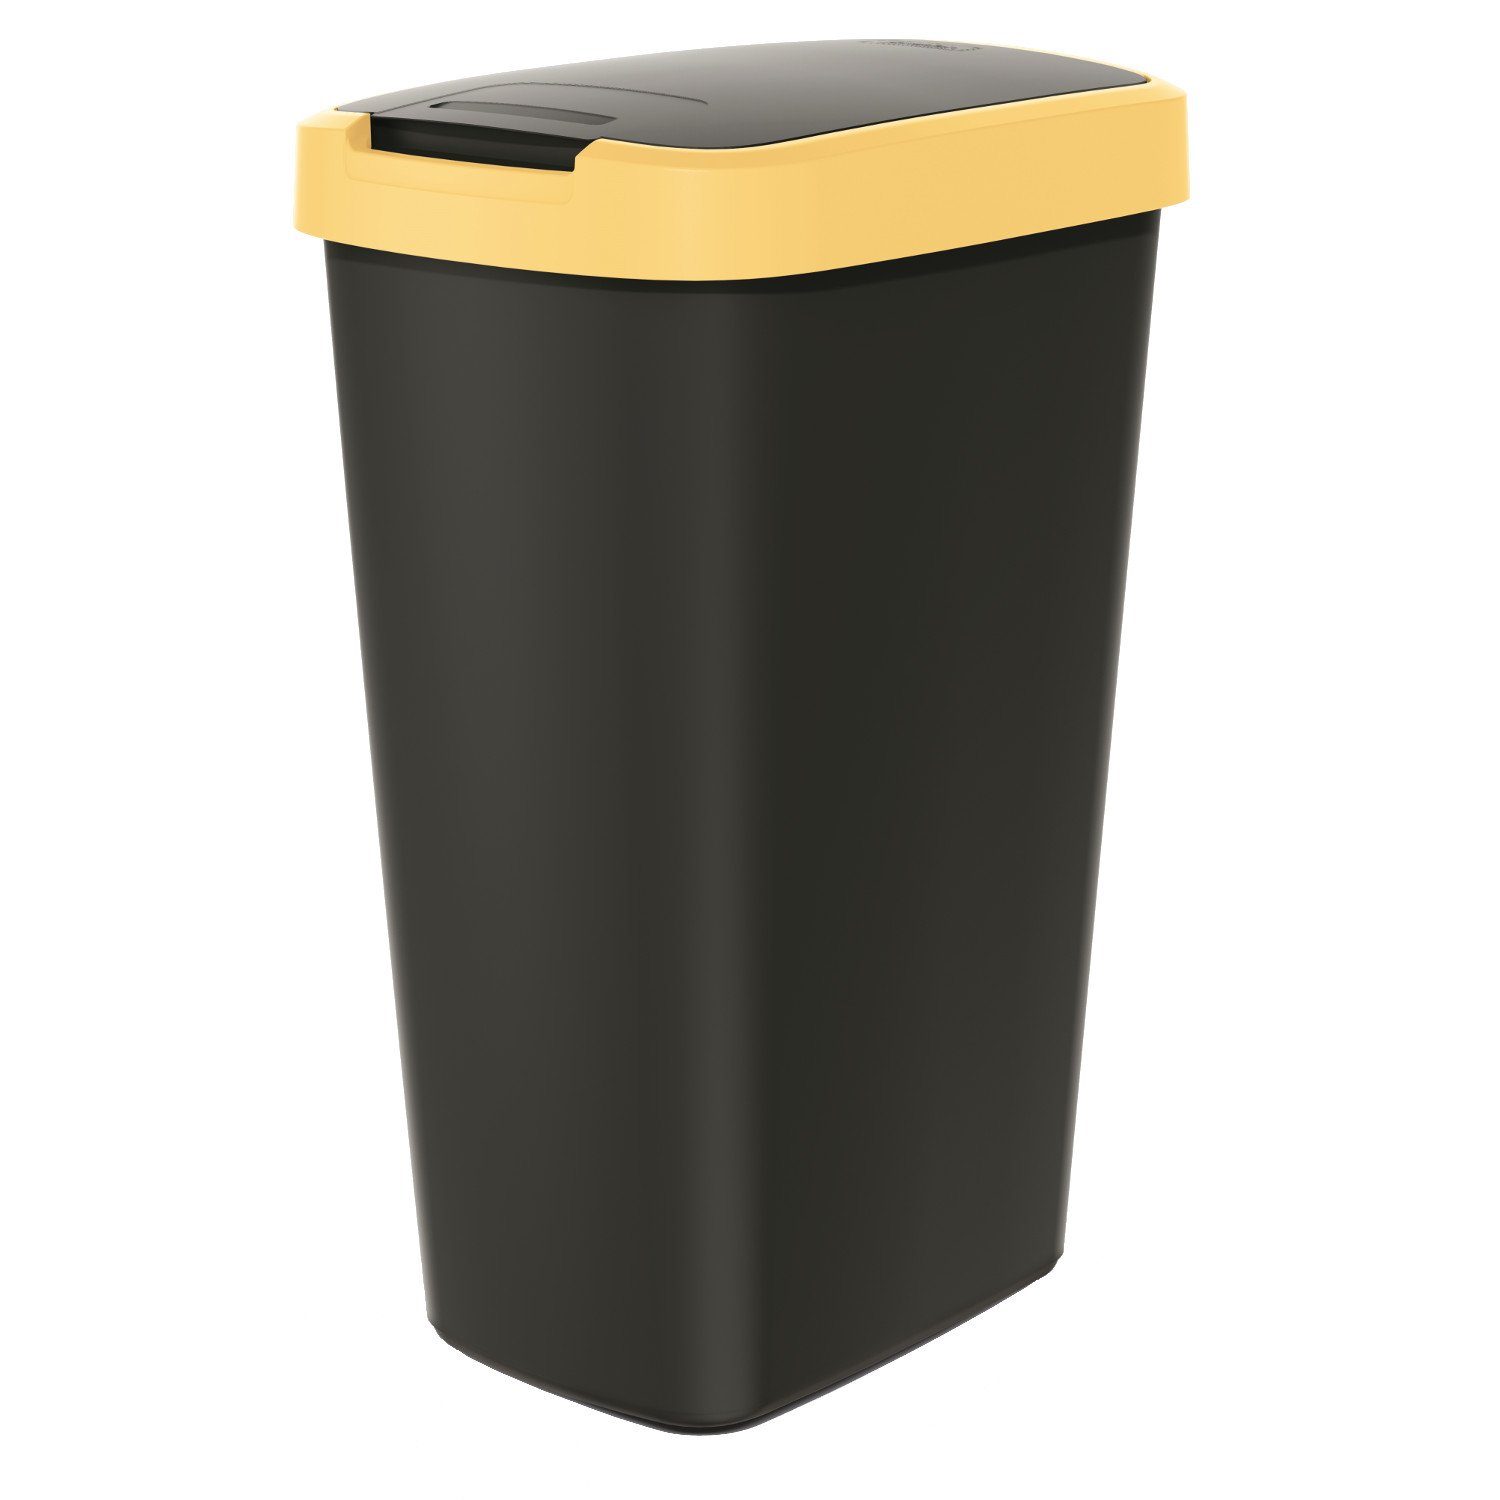 Keden Mülleimer Compacta Q, Abfallbehälter 45l mit Deckel KEDEN COMPACTA Q Gelb